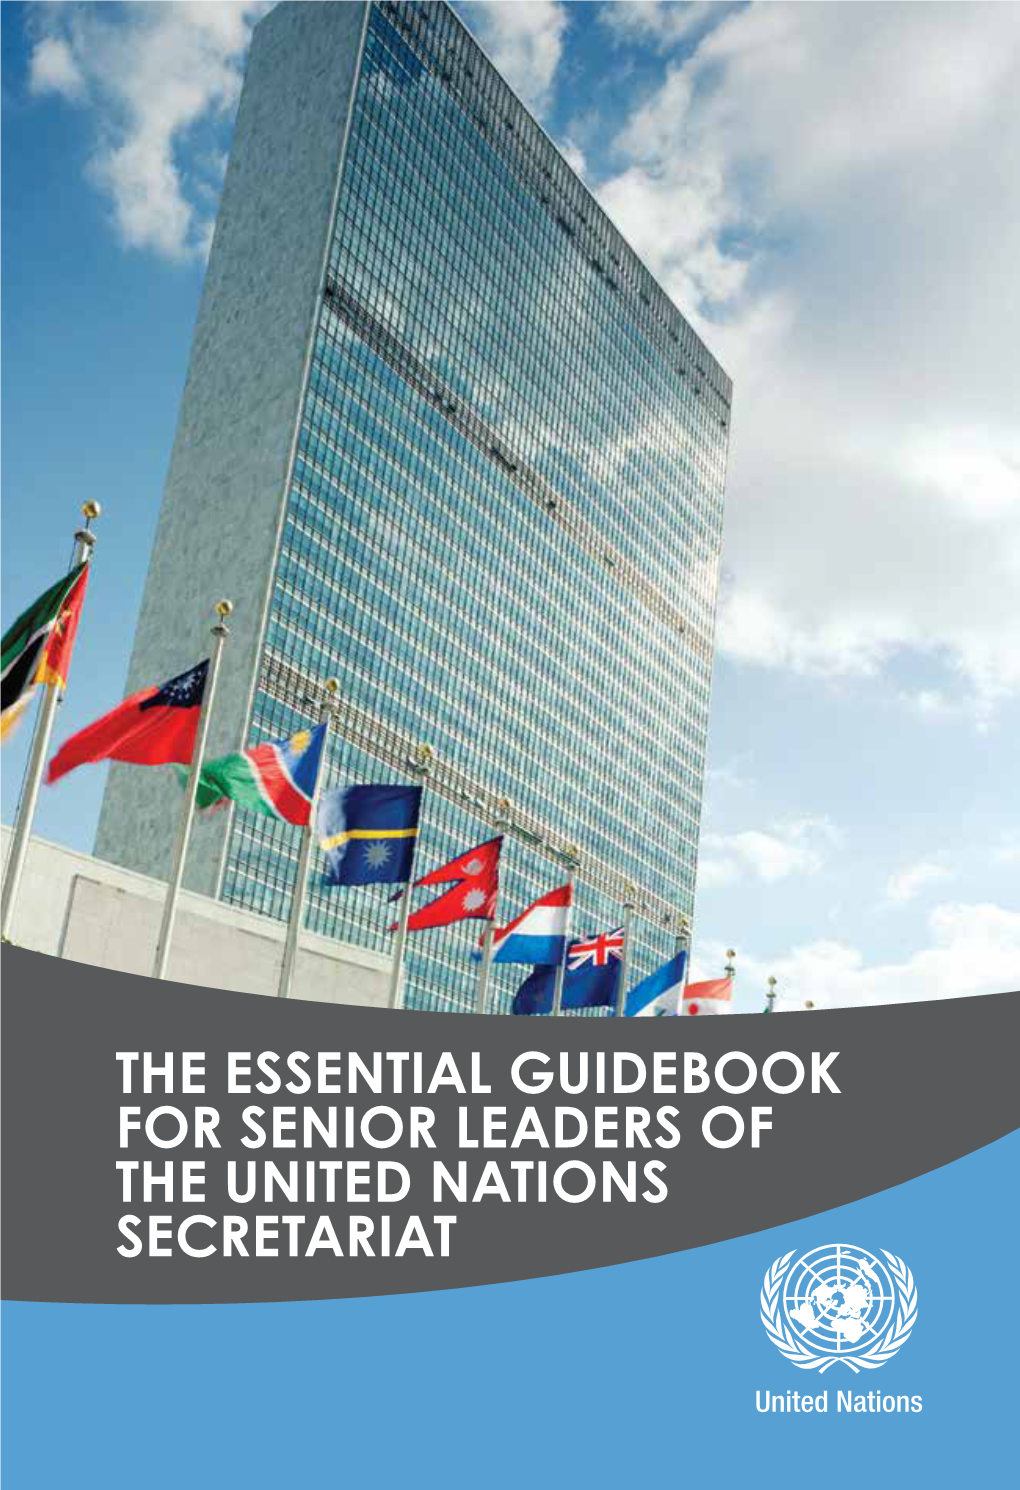 The Essential Guidebook for SENIOR LEADERS of the UNITED NATIONS SECRETARIAT